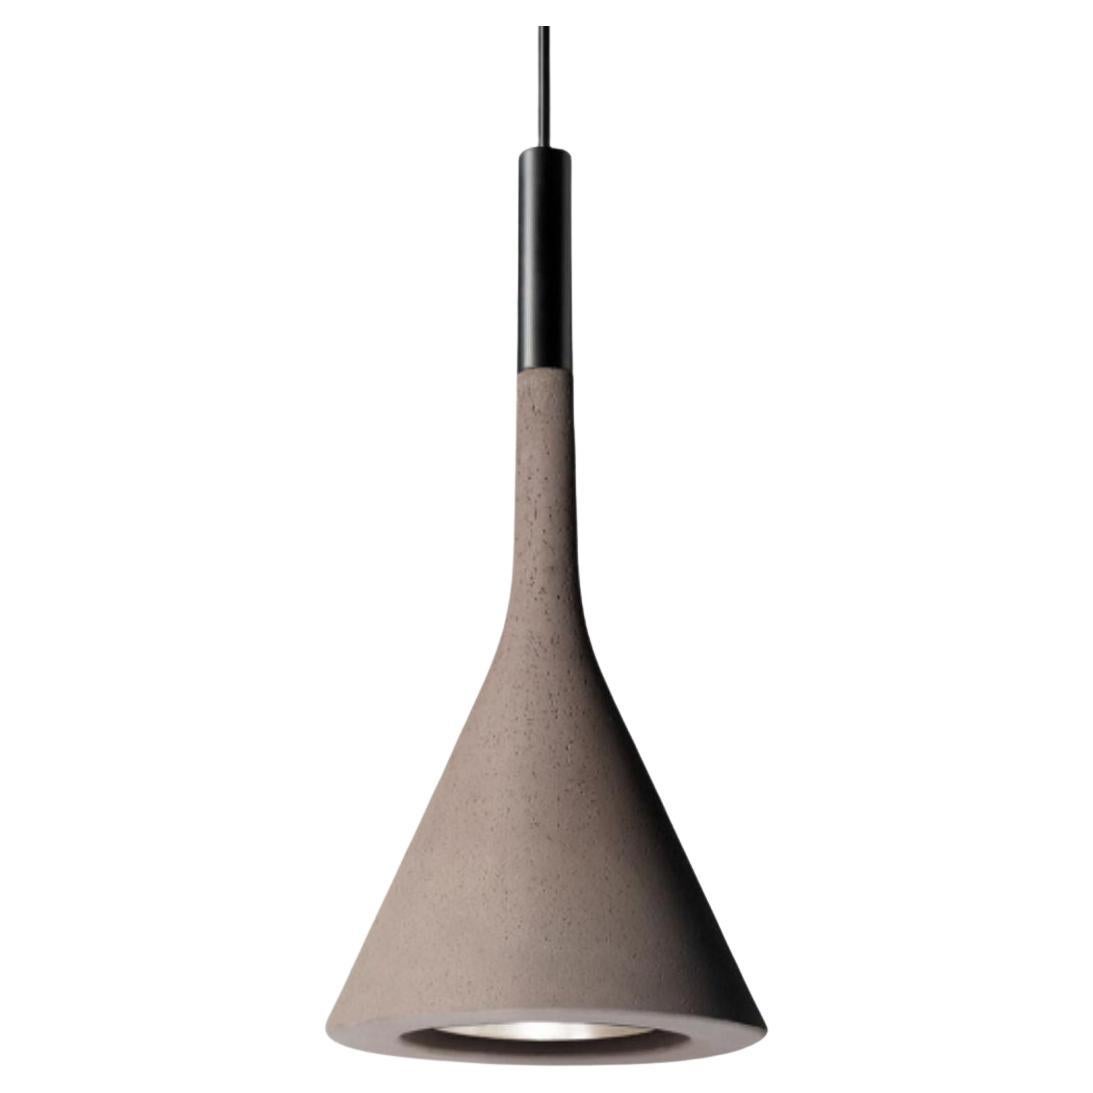 Lucidi & Pevere ‘Aplomb’ Concrete Pendant Lamp in Maroon for Foscarini For Sale